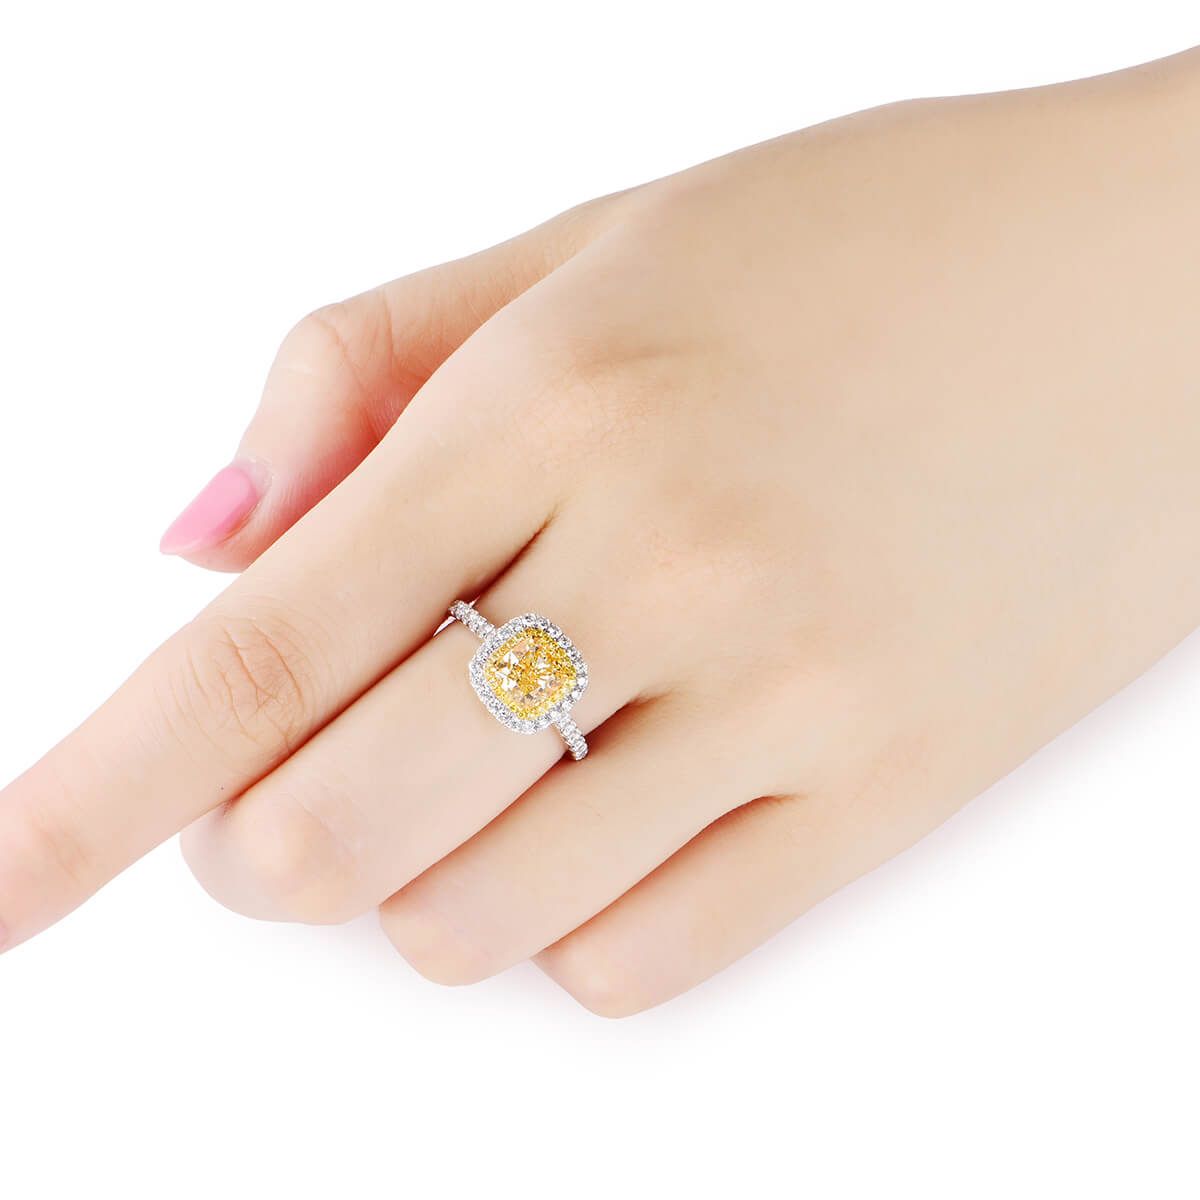 Fancy Intense Yellow Diamond Ring, 1.24 Ct. (1.75 Ct. TW), Cushion shape